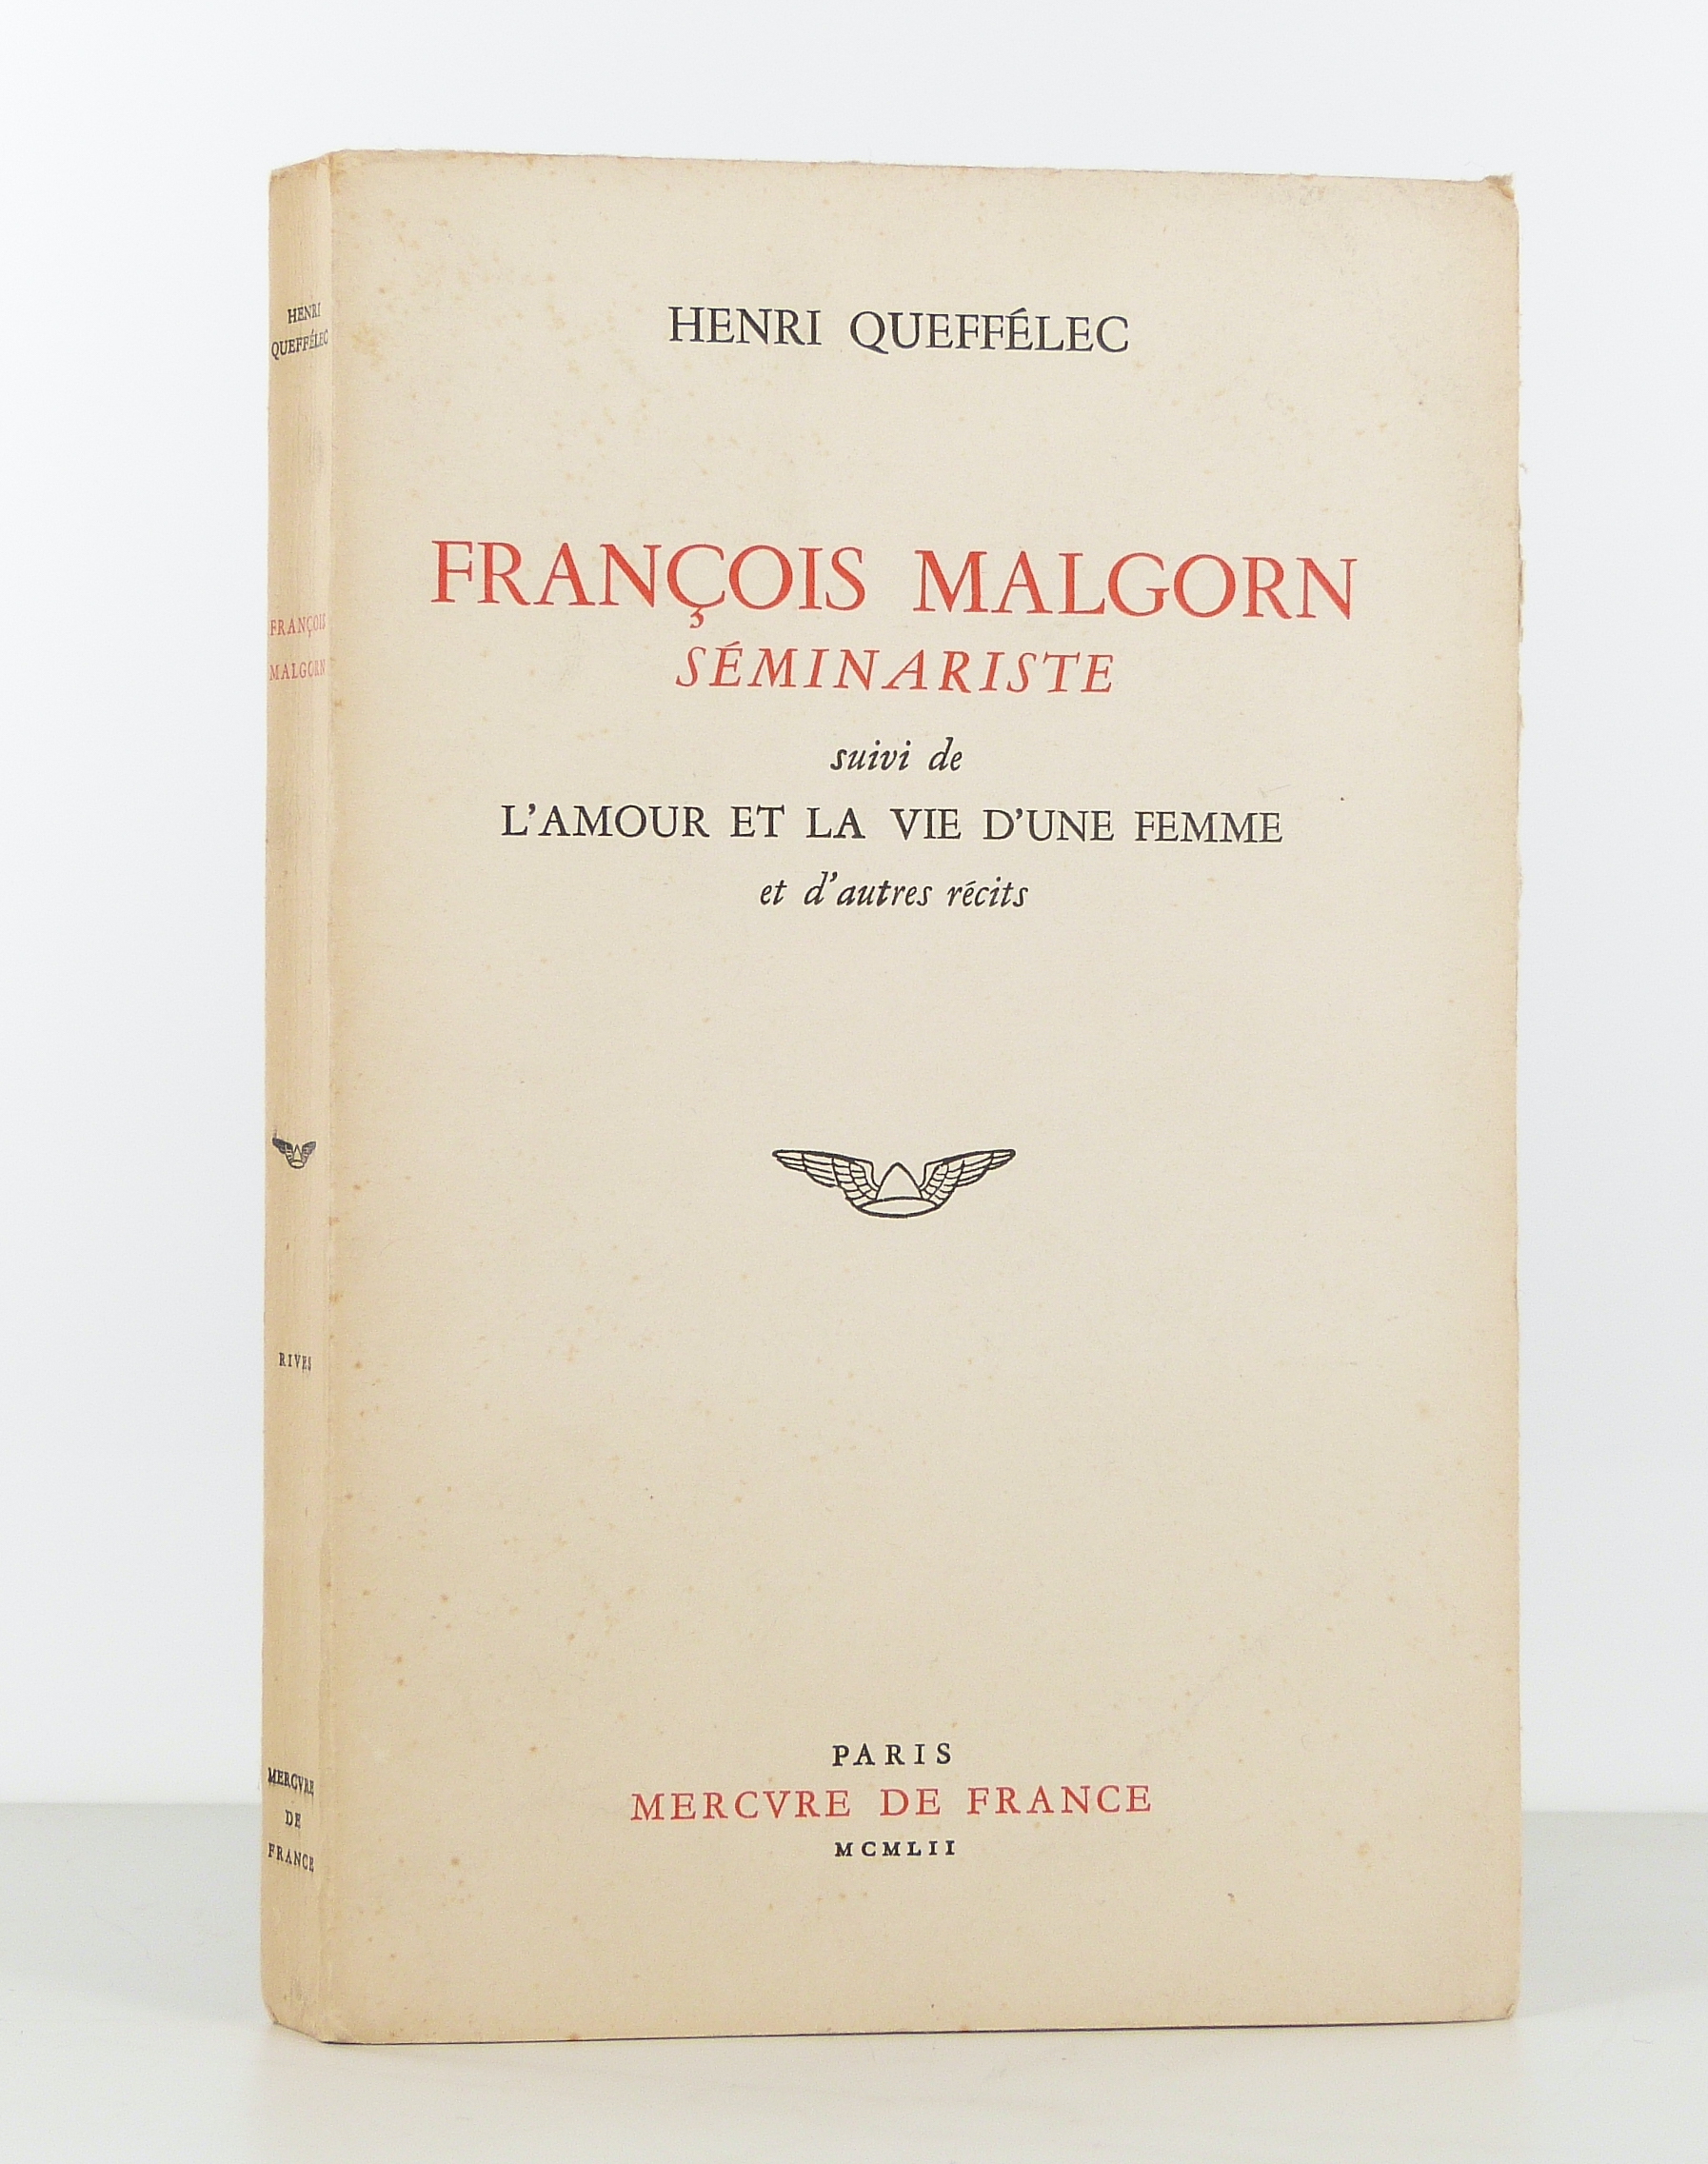 François Malgorn séminariste